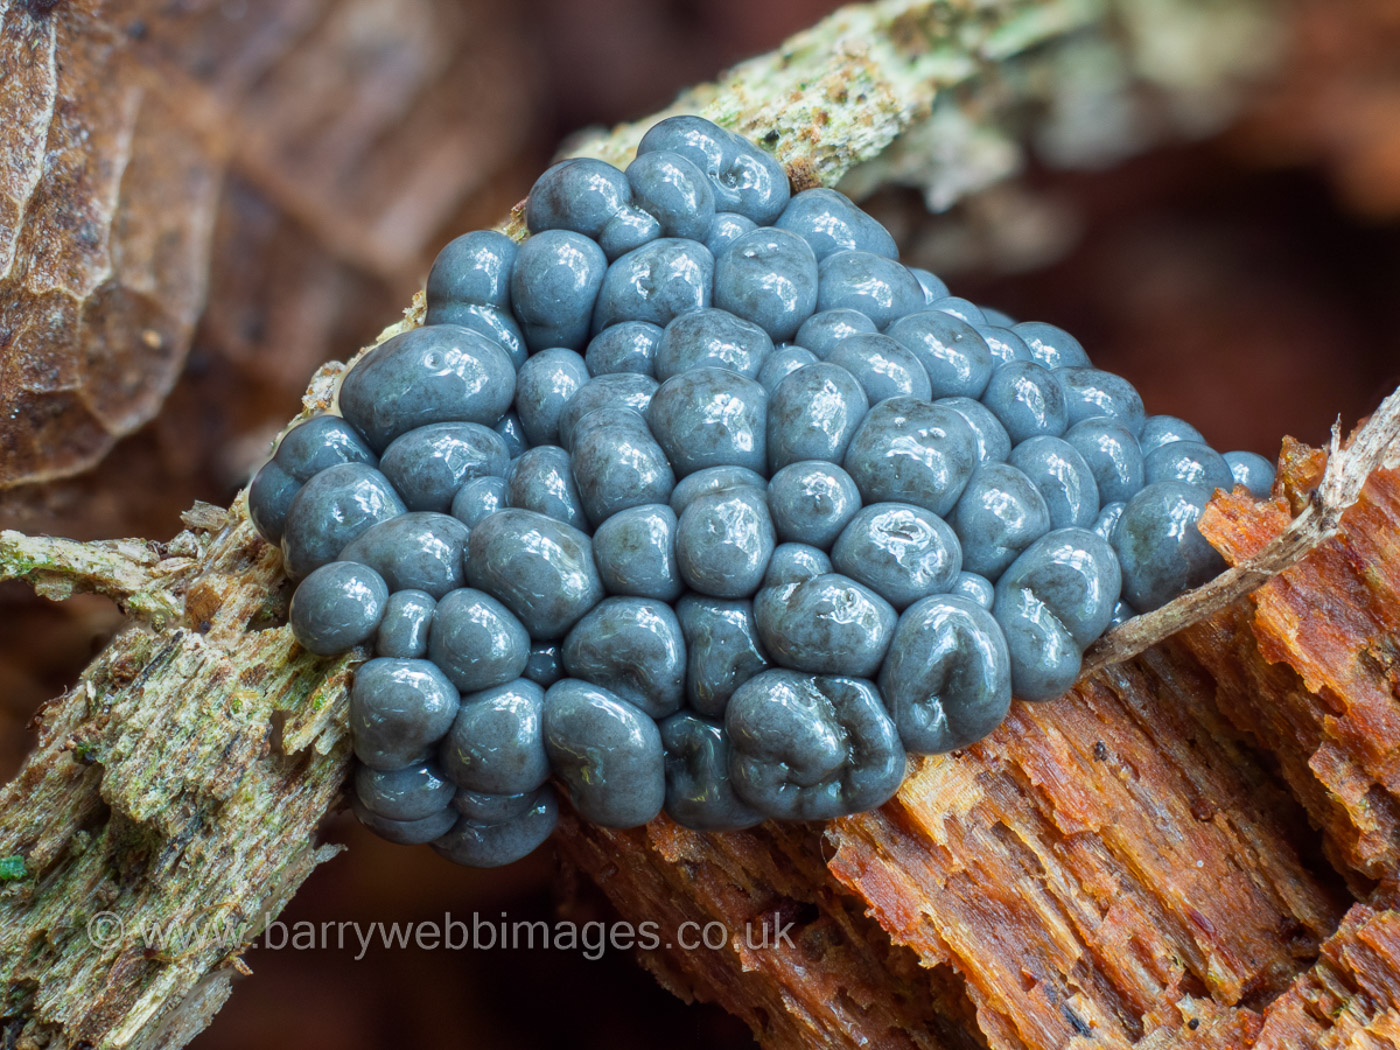 Cribraria argillacea by Barry Webb